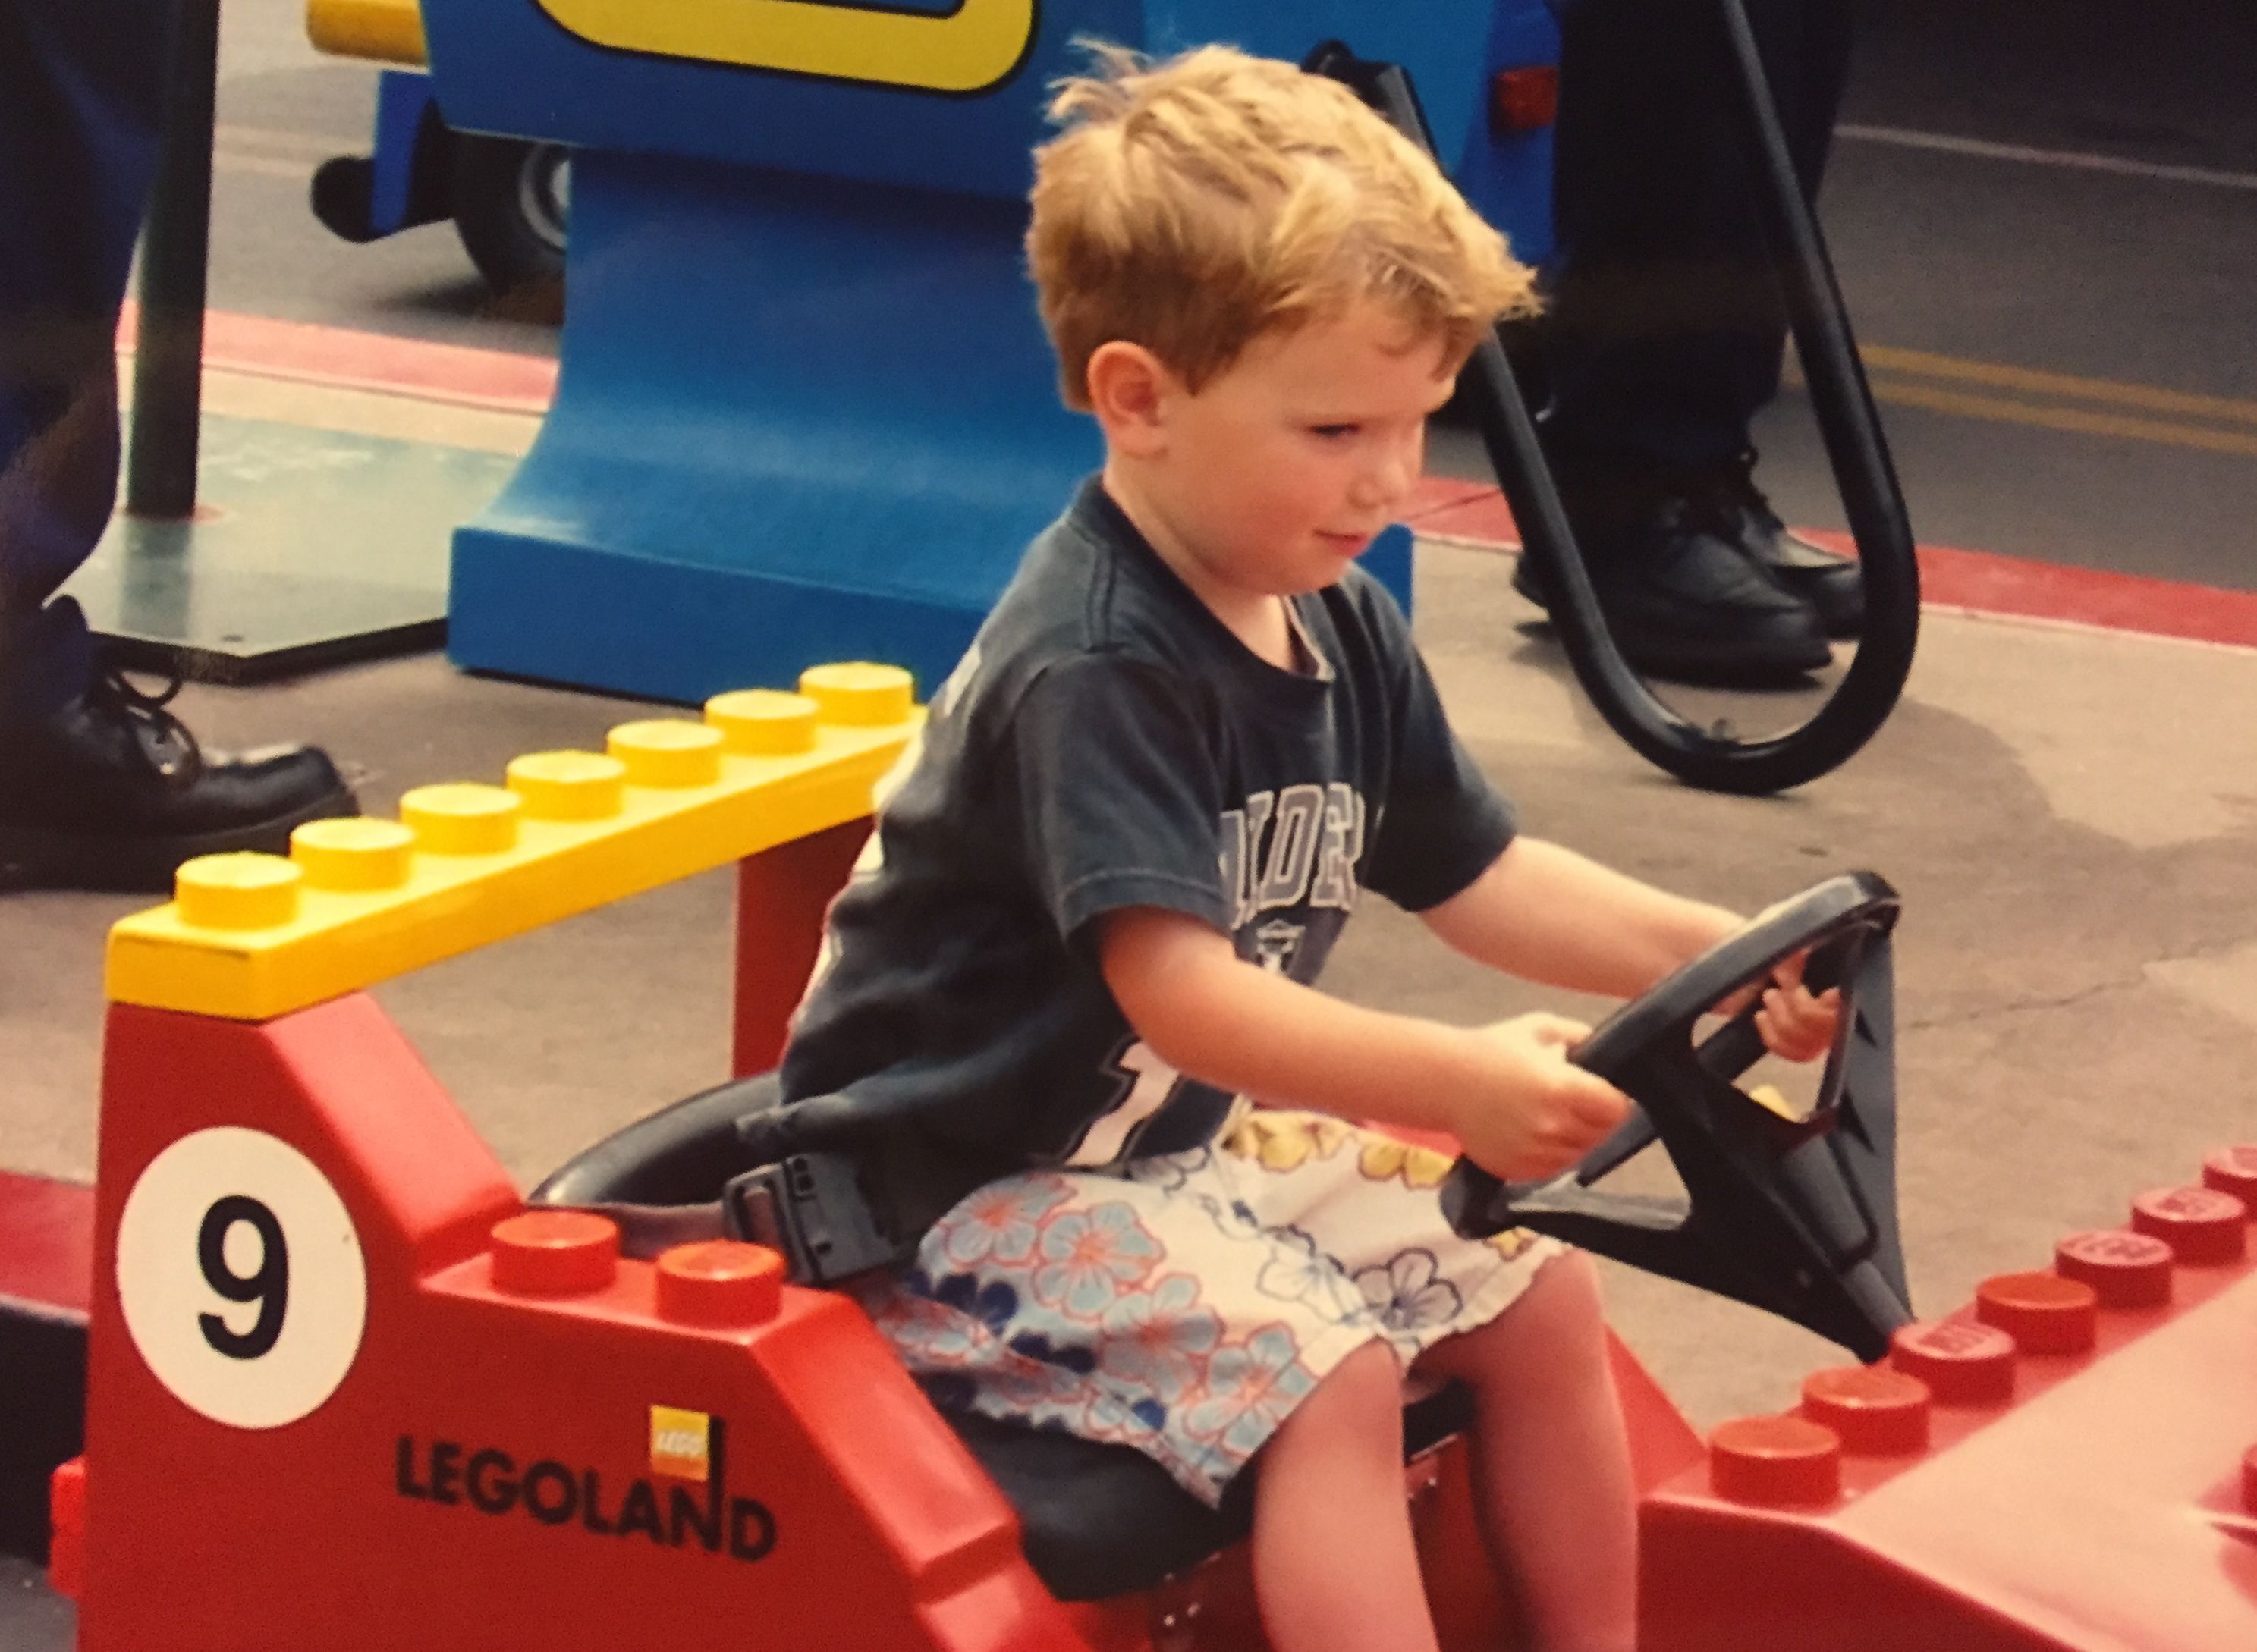 My Son driving a Lego car at Legoland